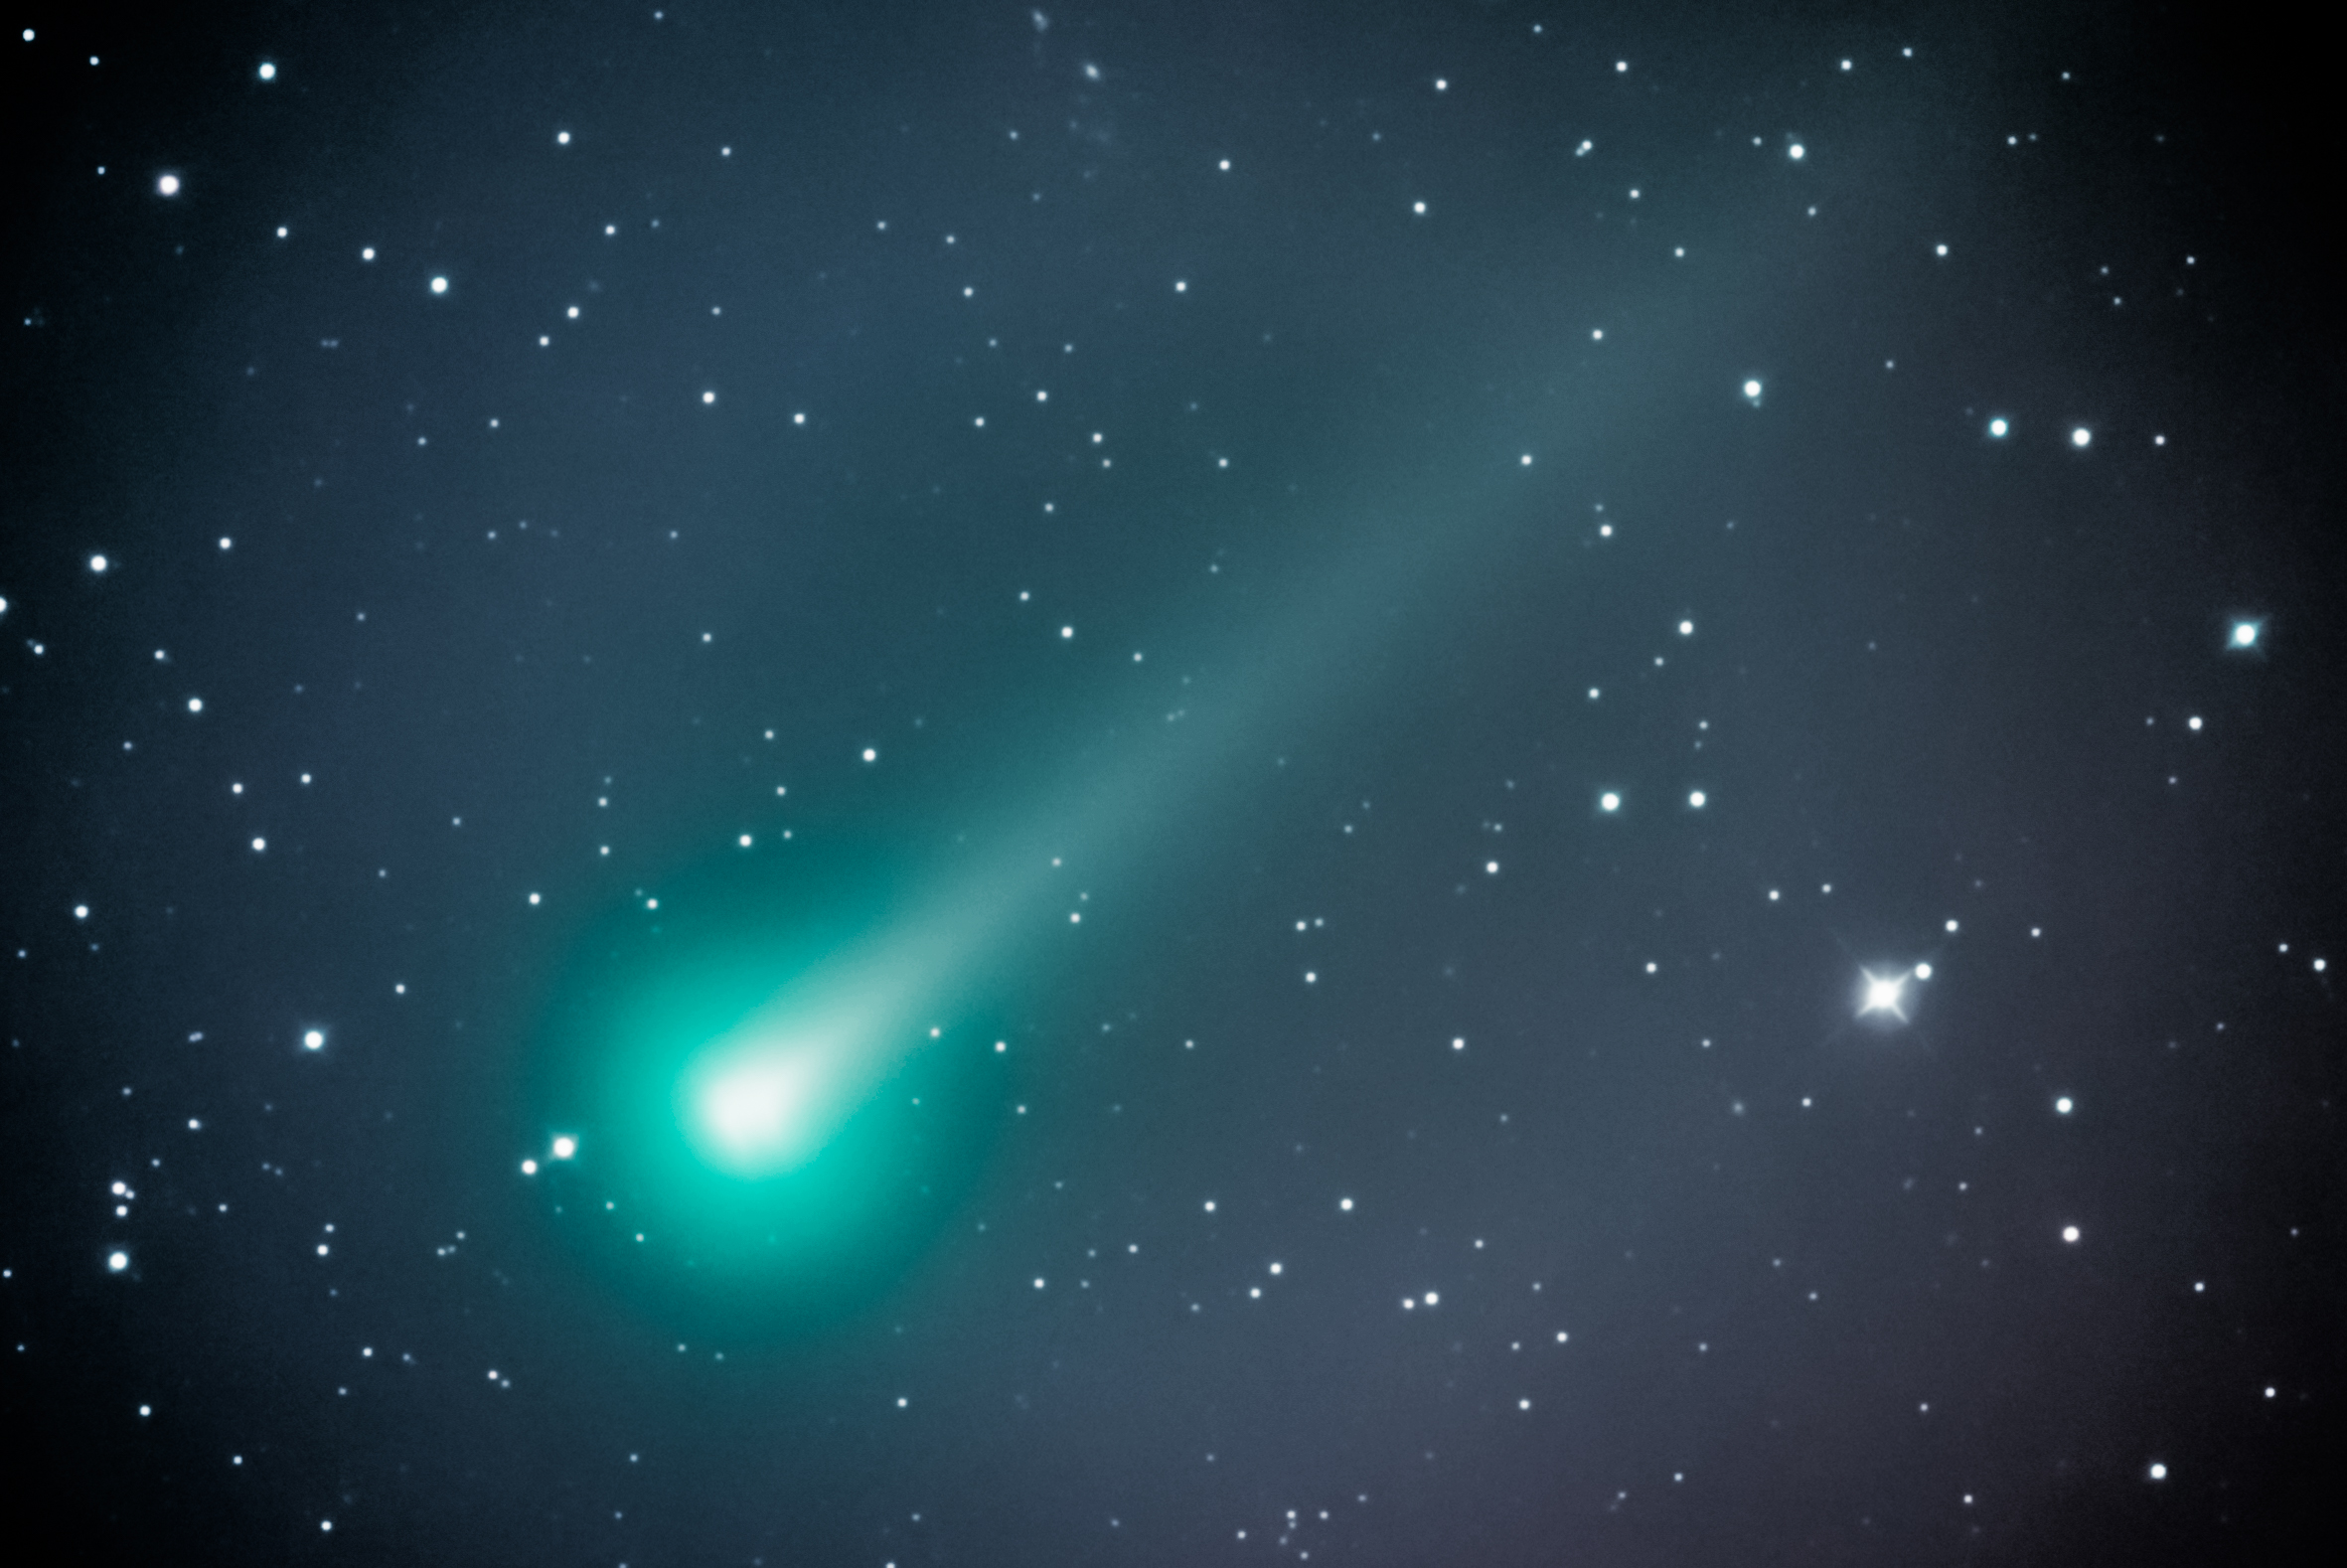 comete%20bernard%2060s%20x10%20a.2